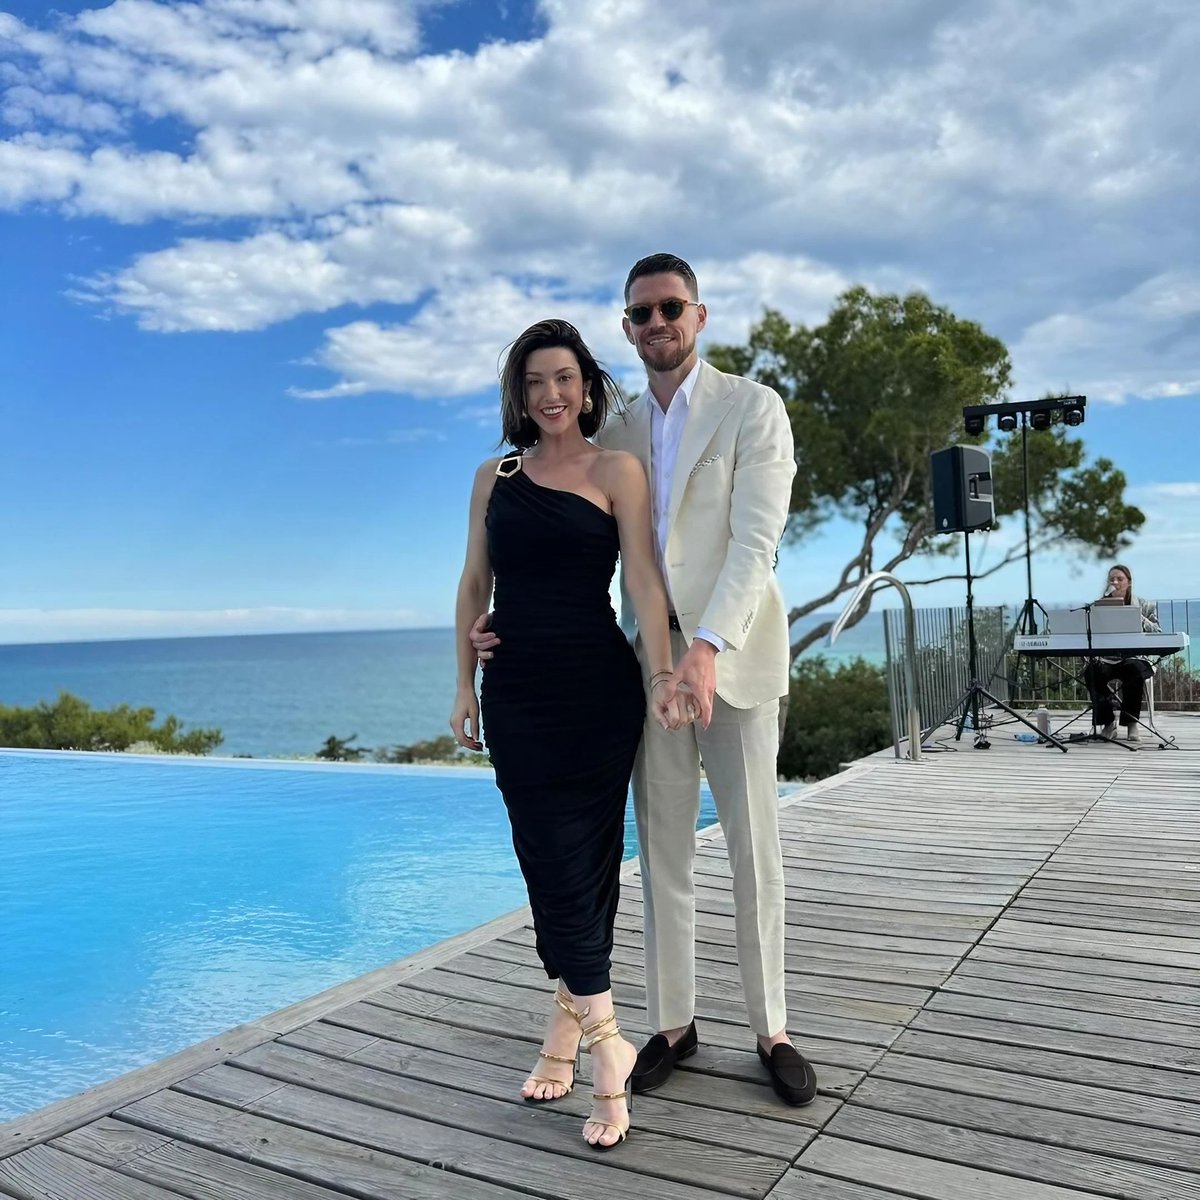 Jorginho & his fiancée Catherine Harding attending a wedding in Barcelona, Spain 💒 🇪🇸